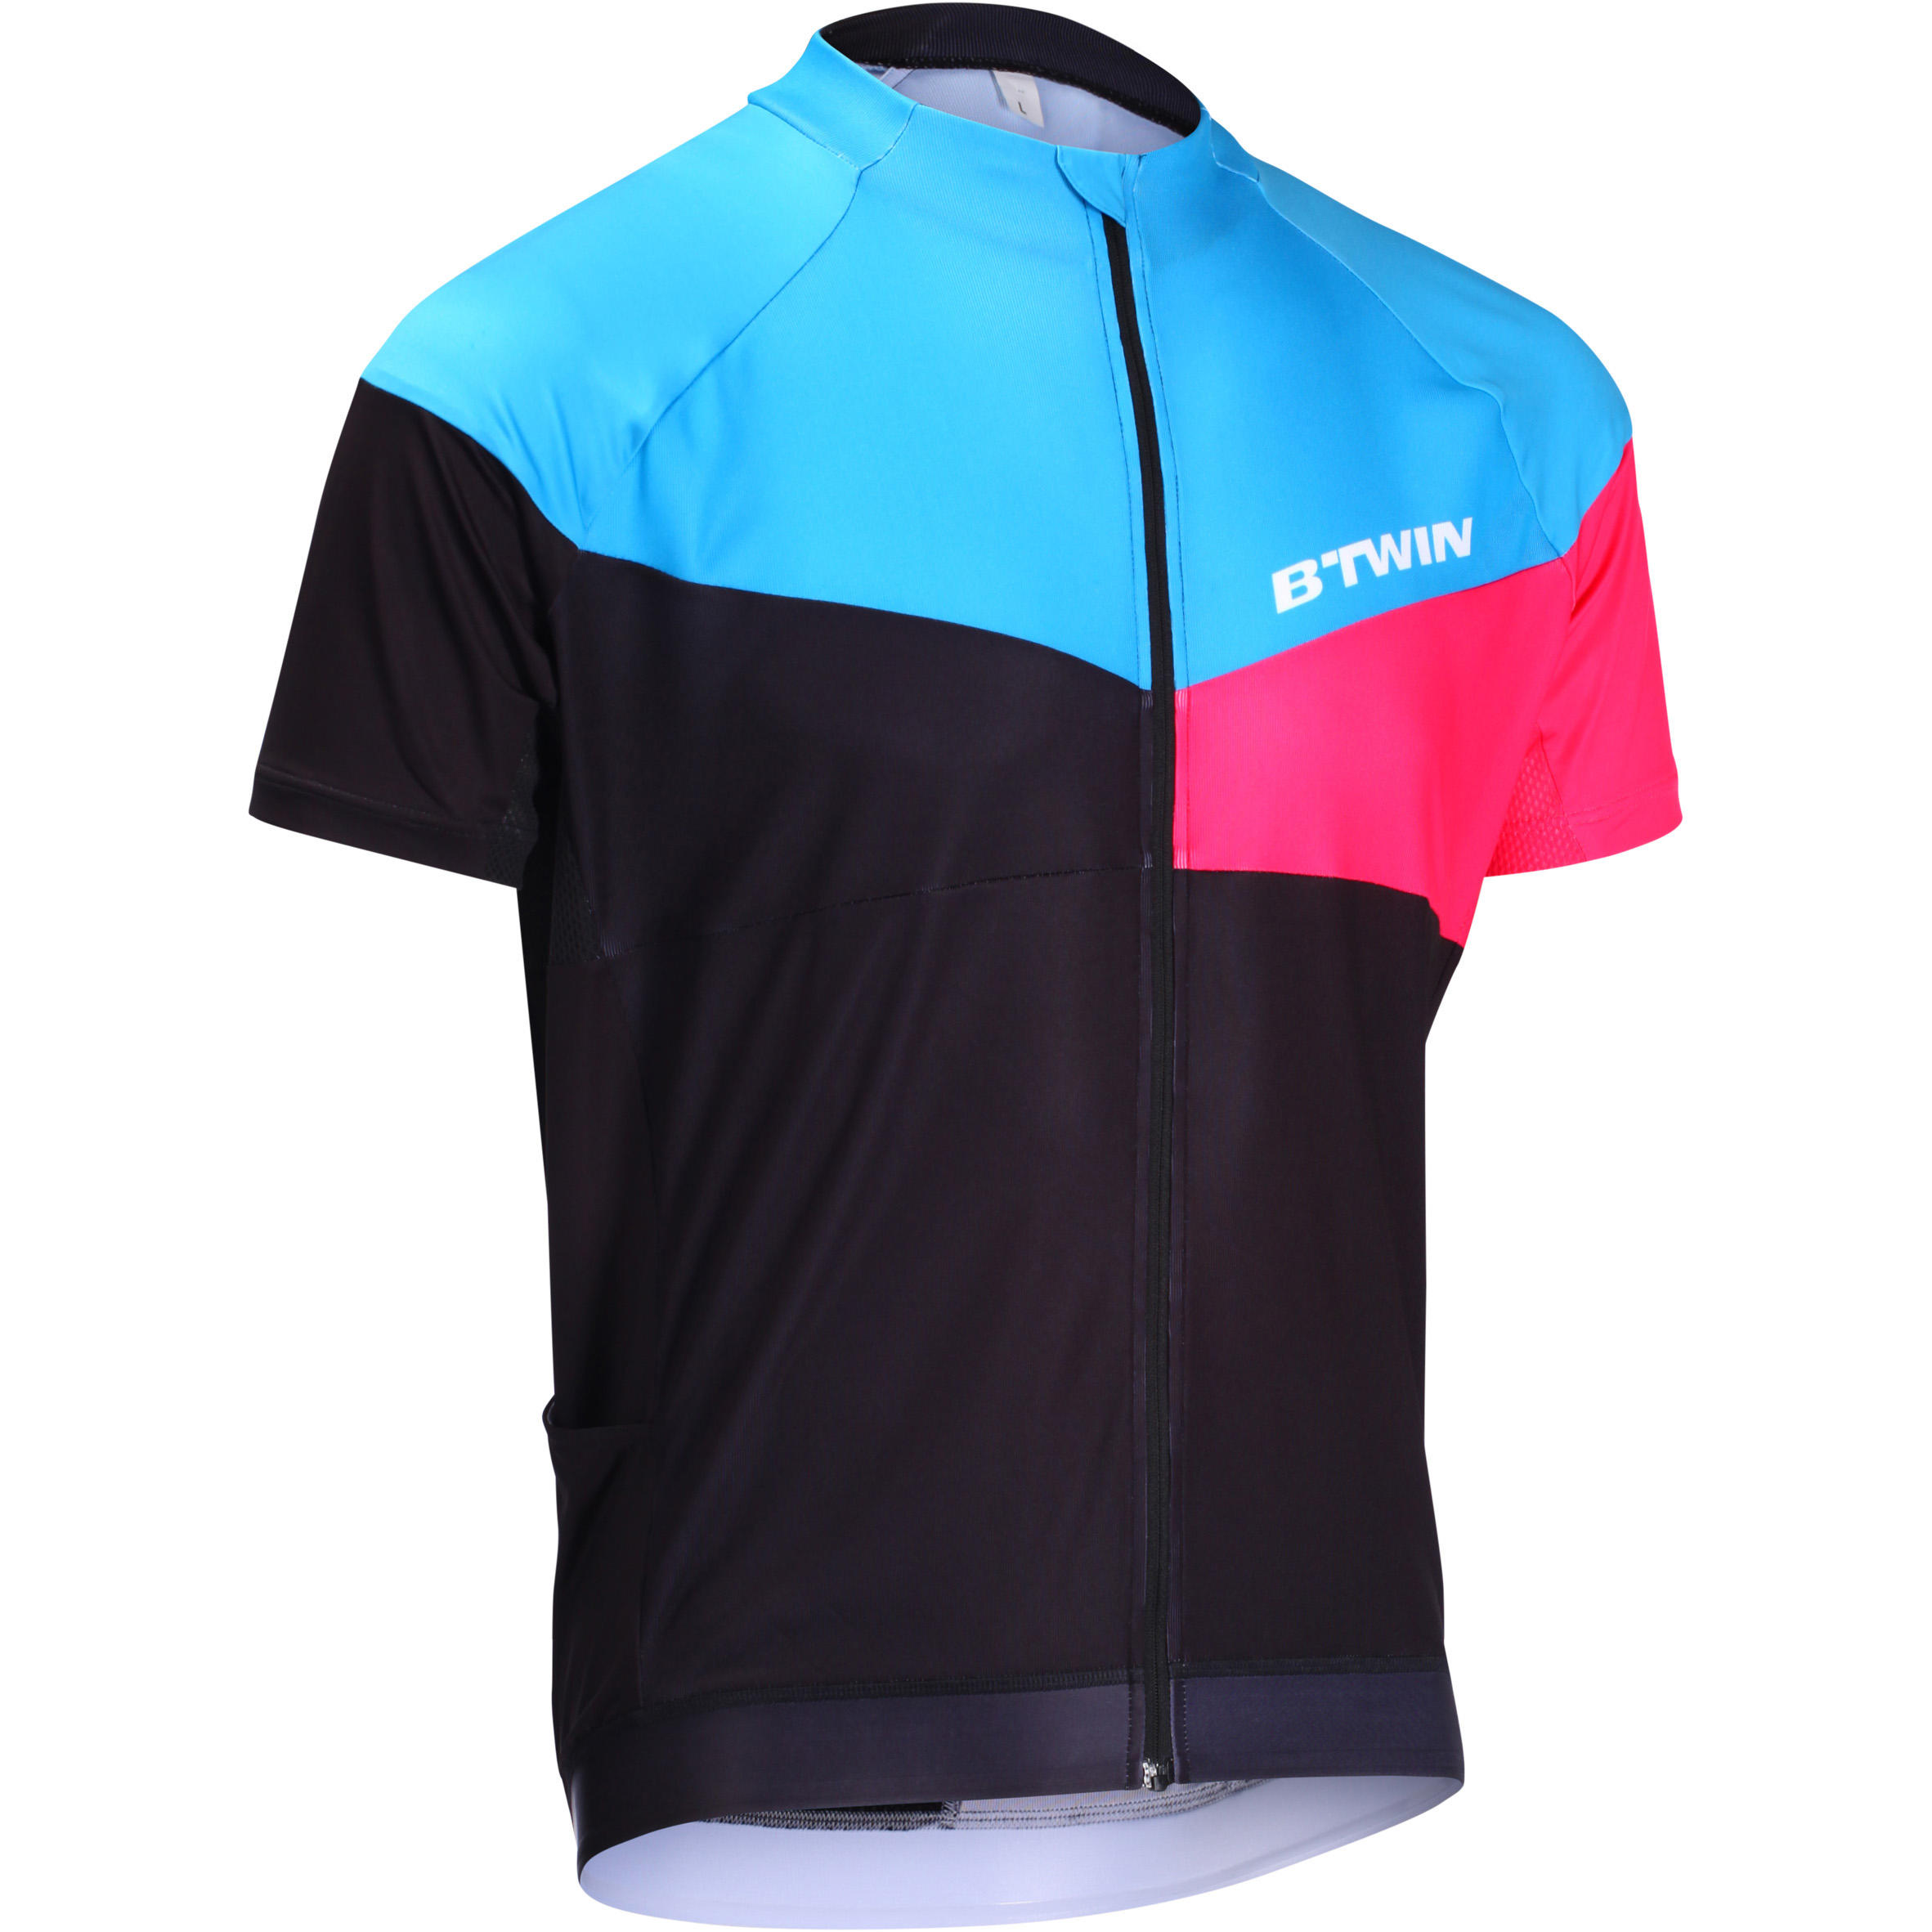 BTWIN 700 Short Sleeve Cycling Jersey - Black/Blue/Pink